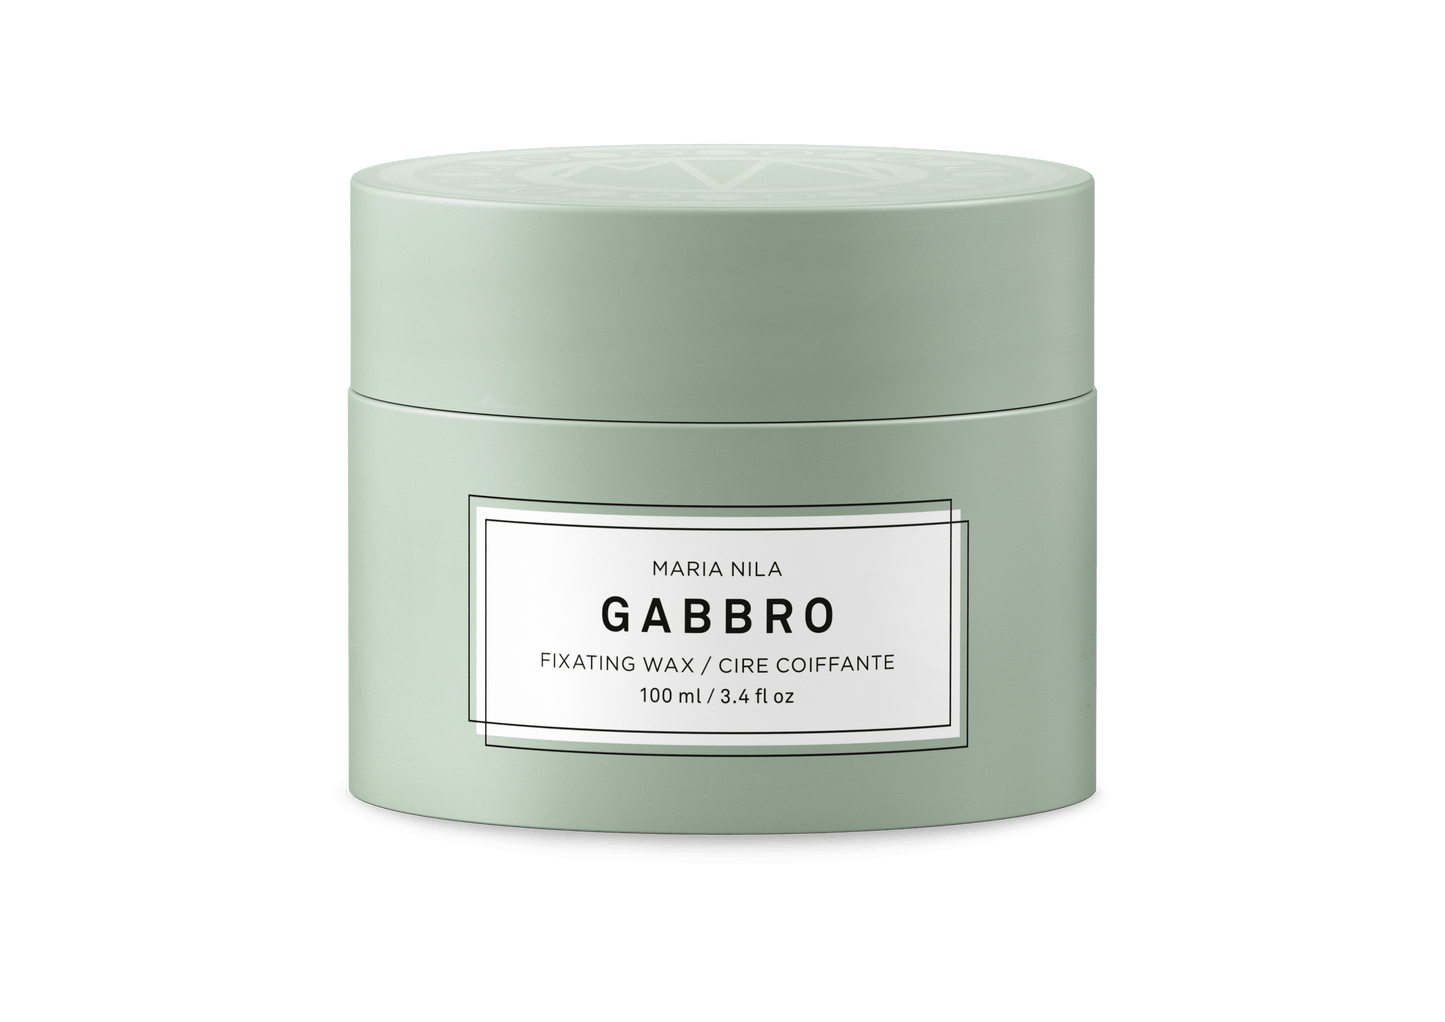 Gabbro Fixating Wax - The Coloroom 